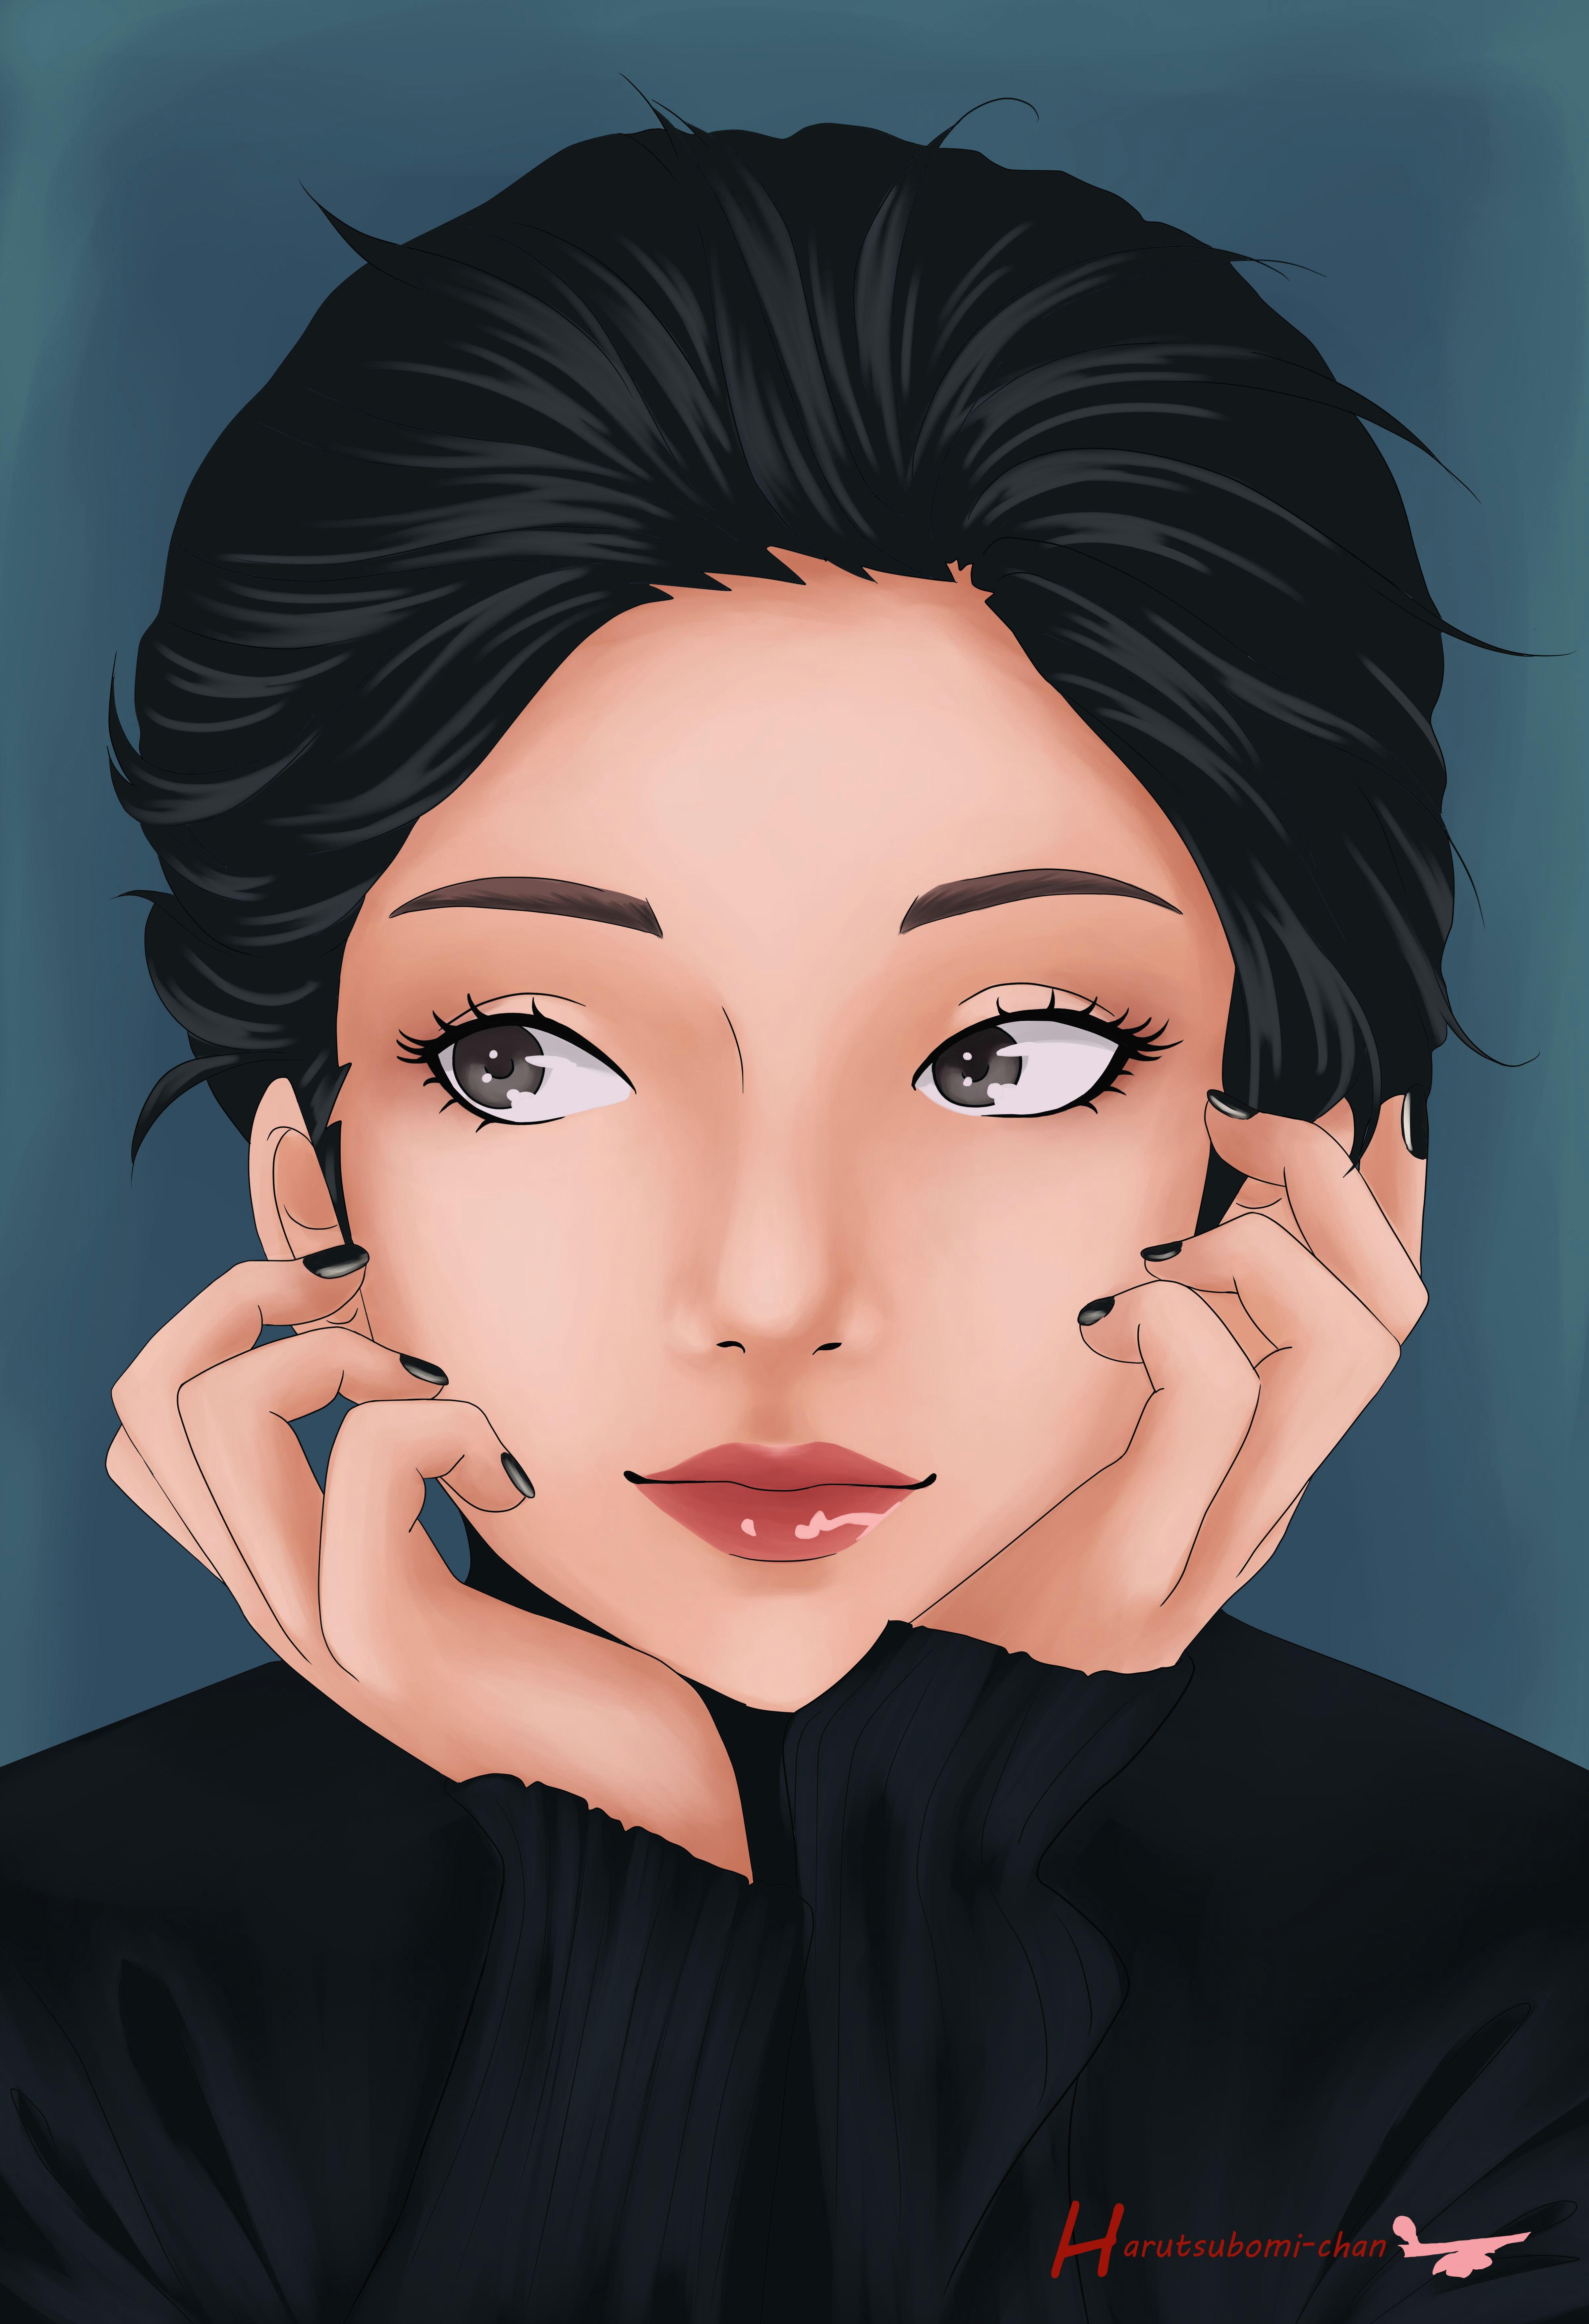 Drawing Of A Girl with Black Hair Anime Manga Portrait Girl Cute Drawing Black Eyes Hair